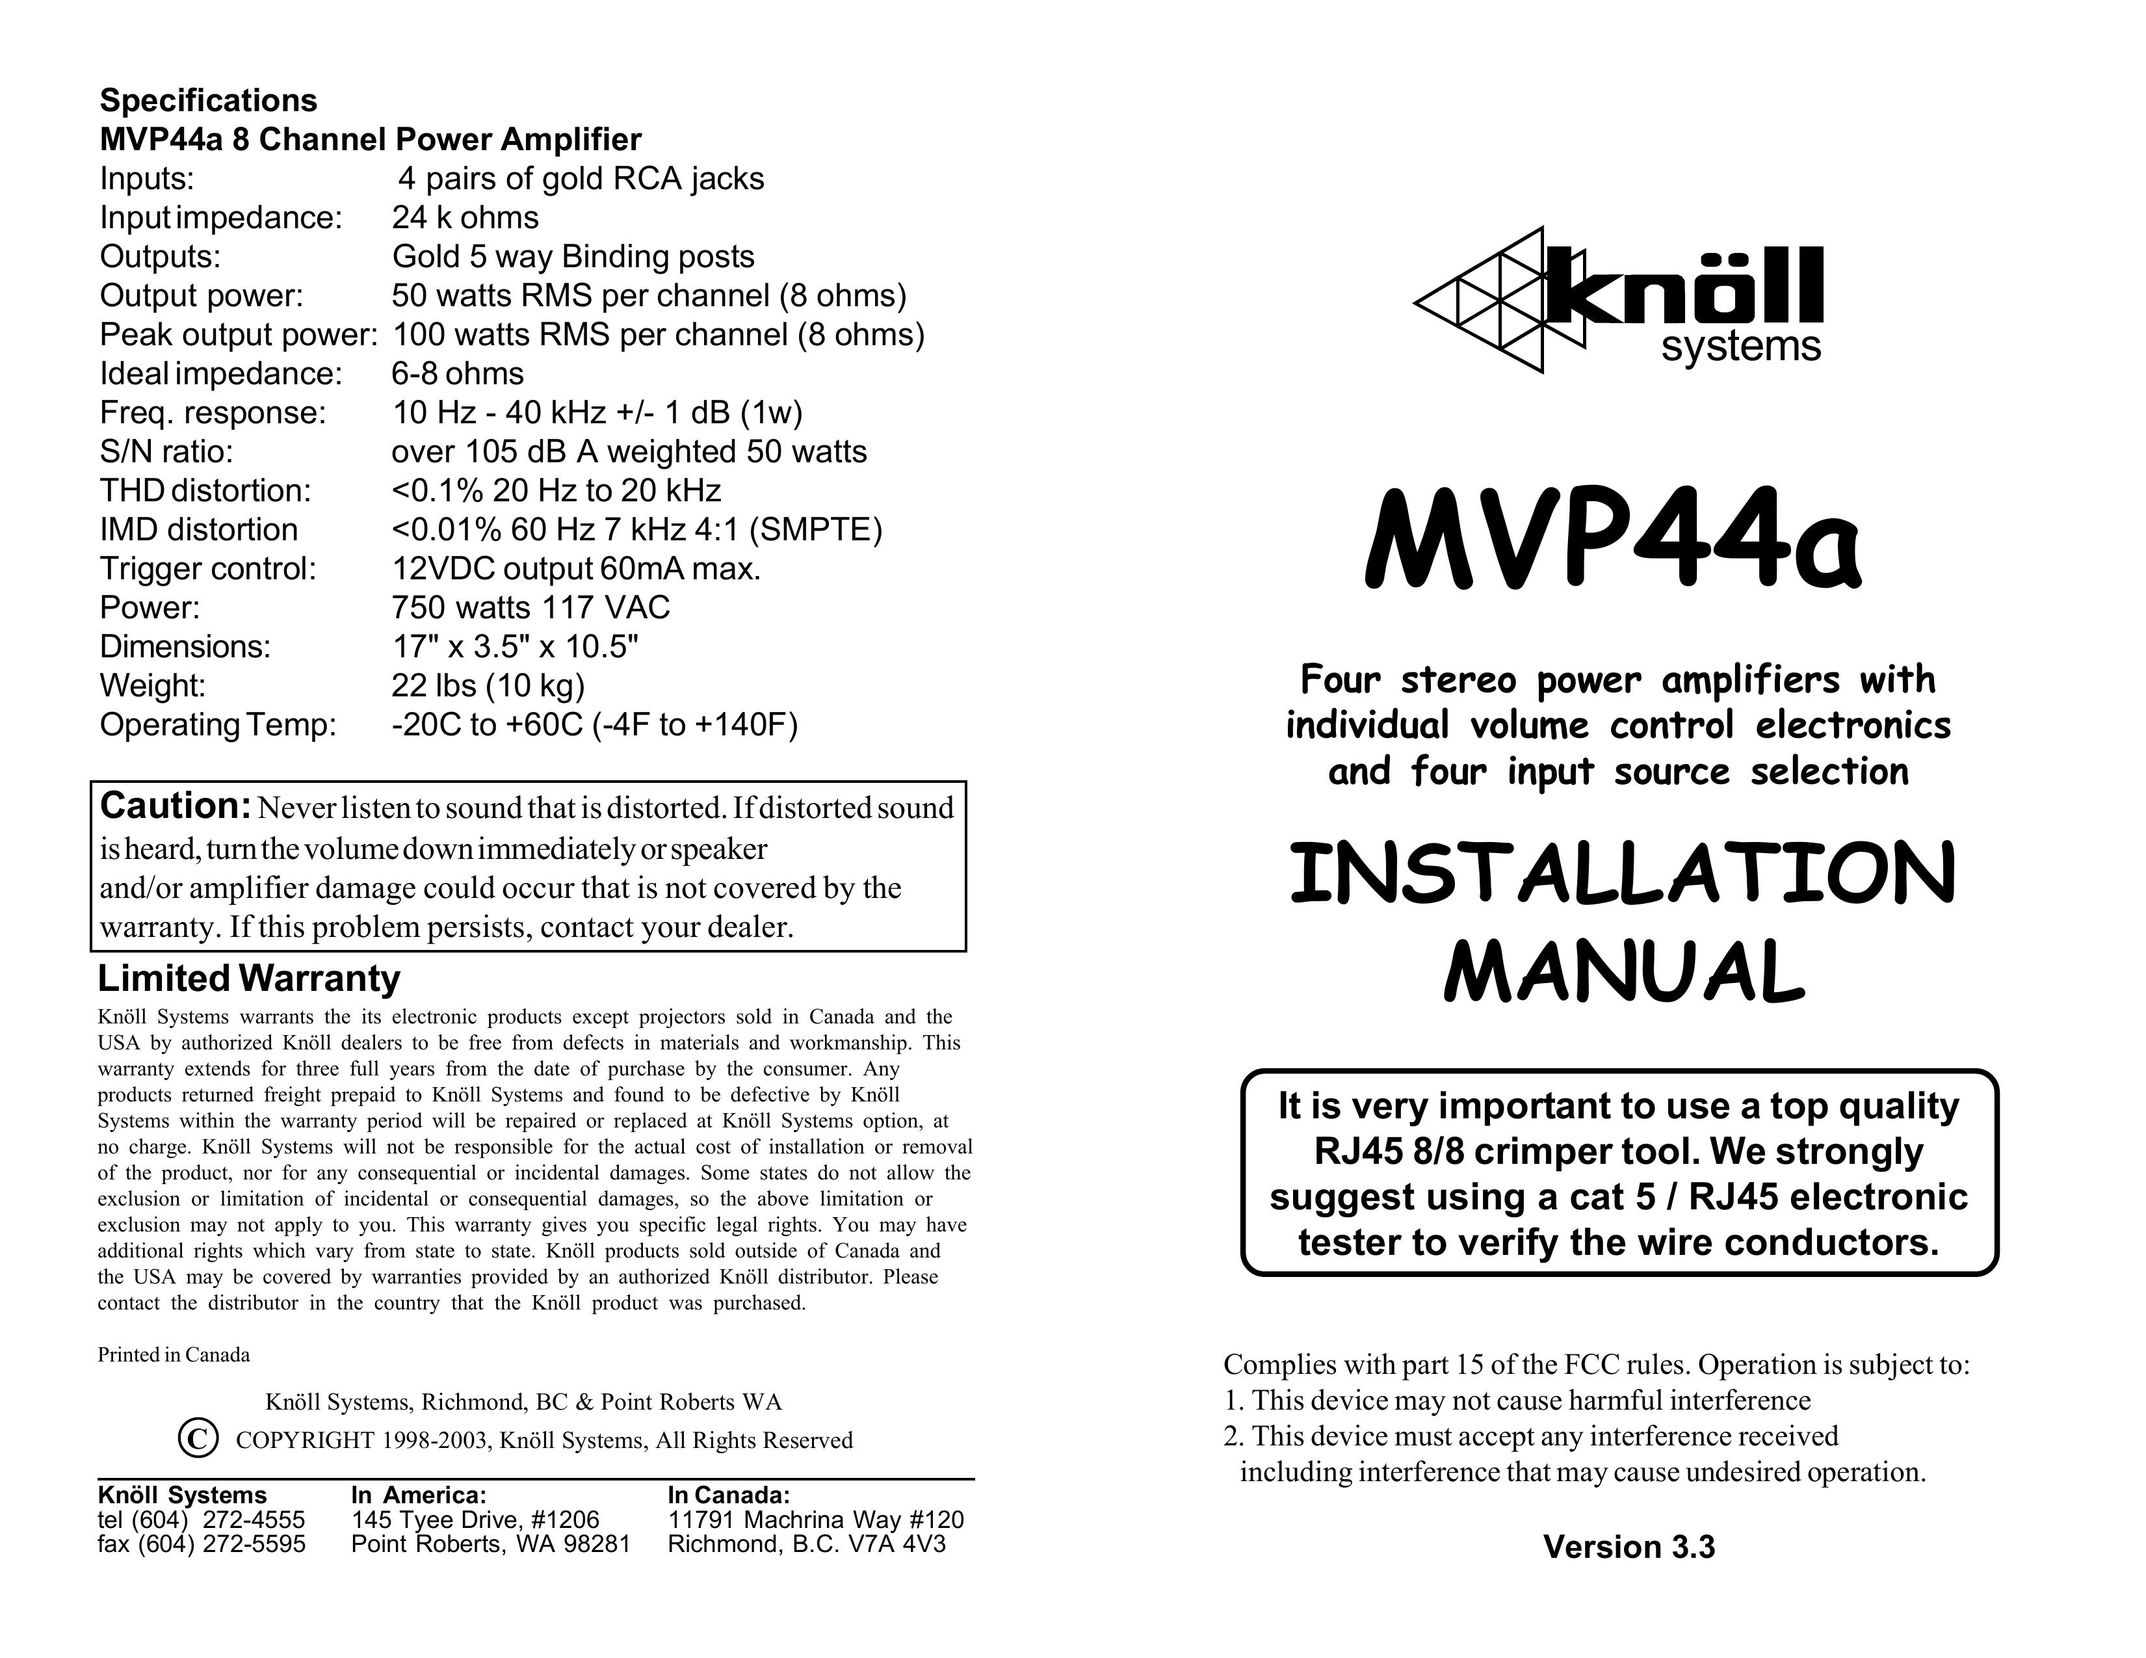 Knoll Systems MVP44a Car Amplifier User Manual